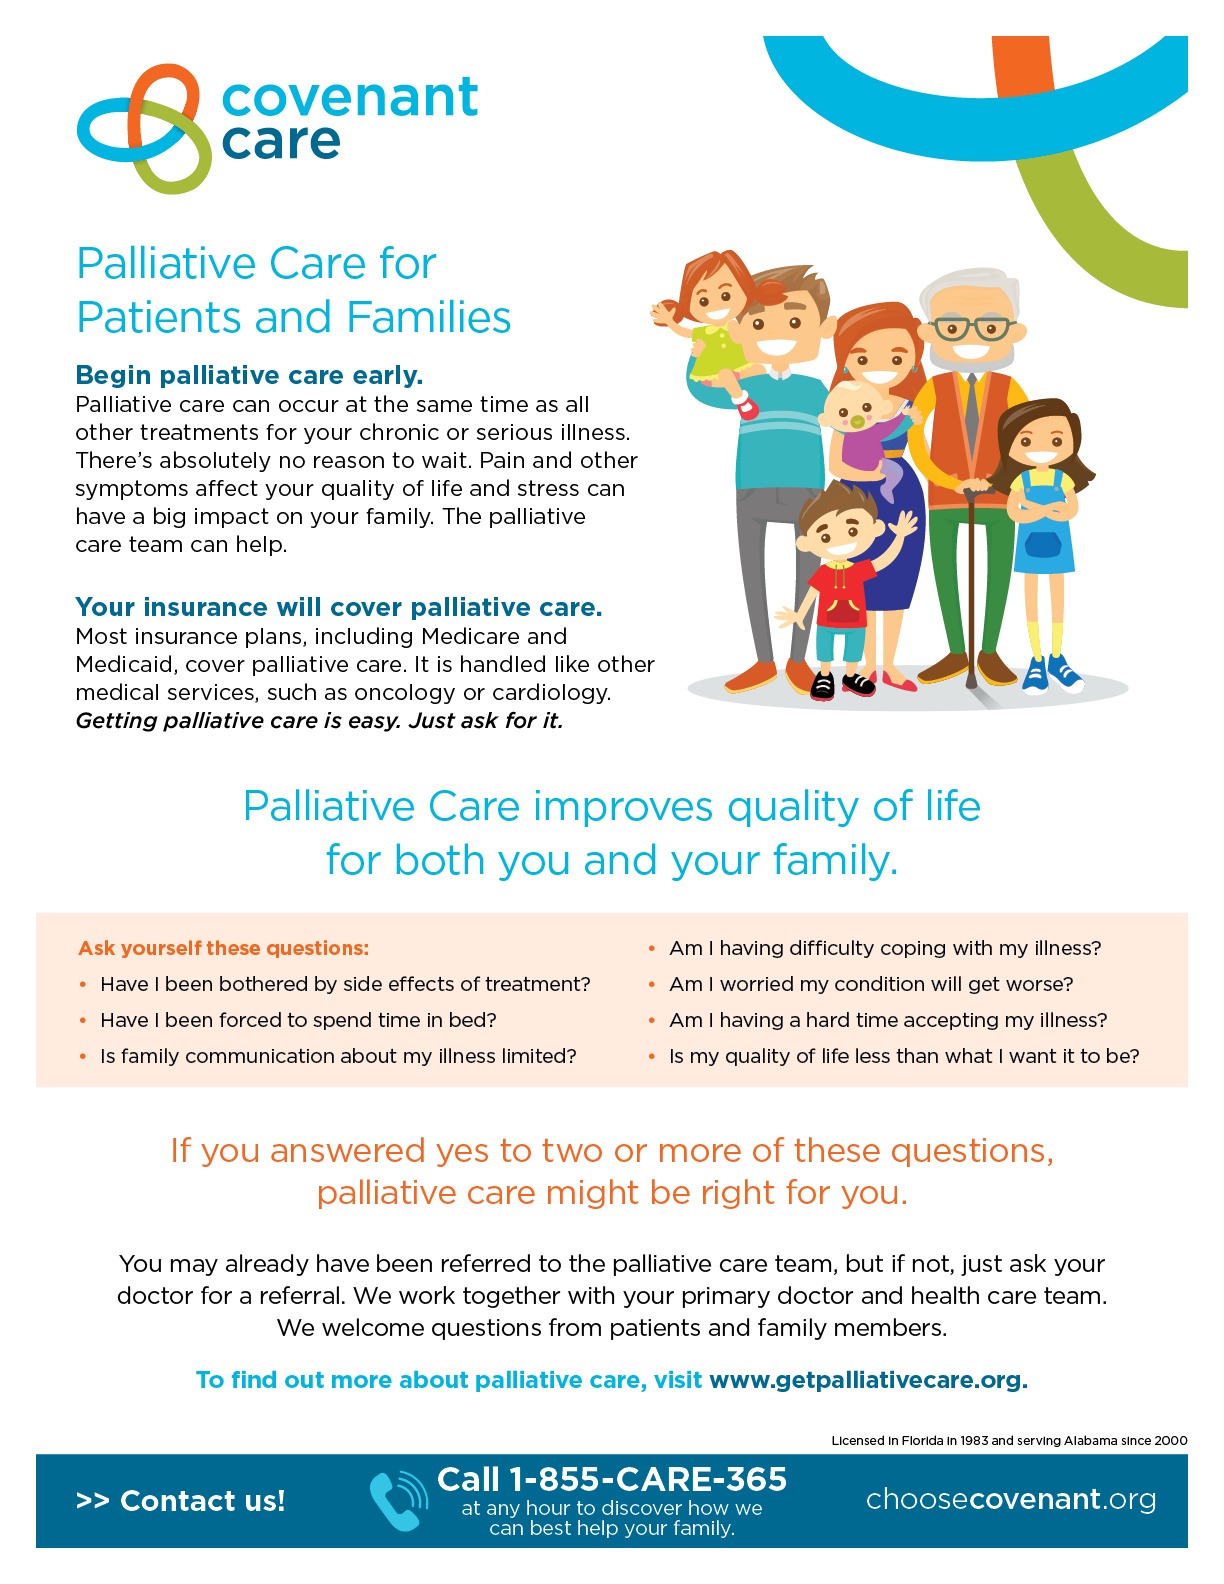 Covenant Care Pensacola FL Palliative Care Infographic Flyer